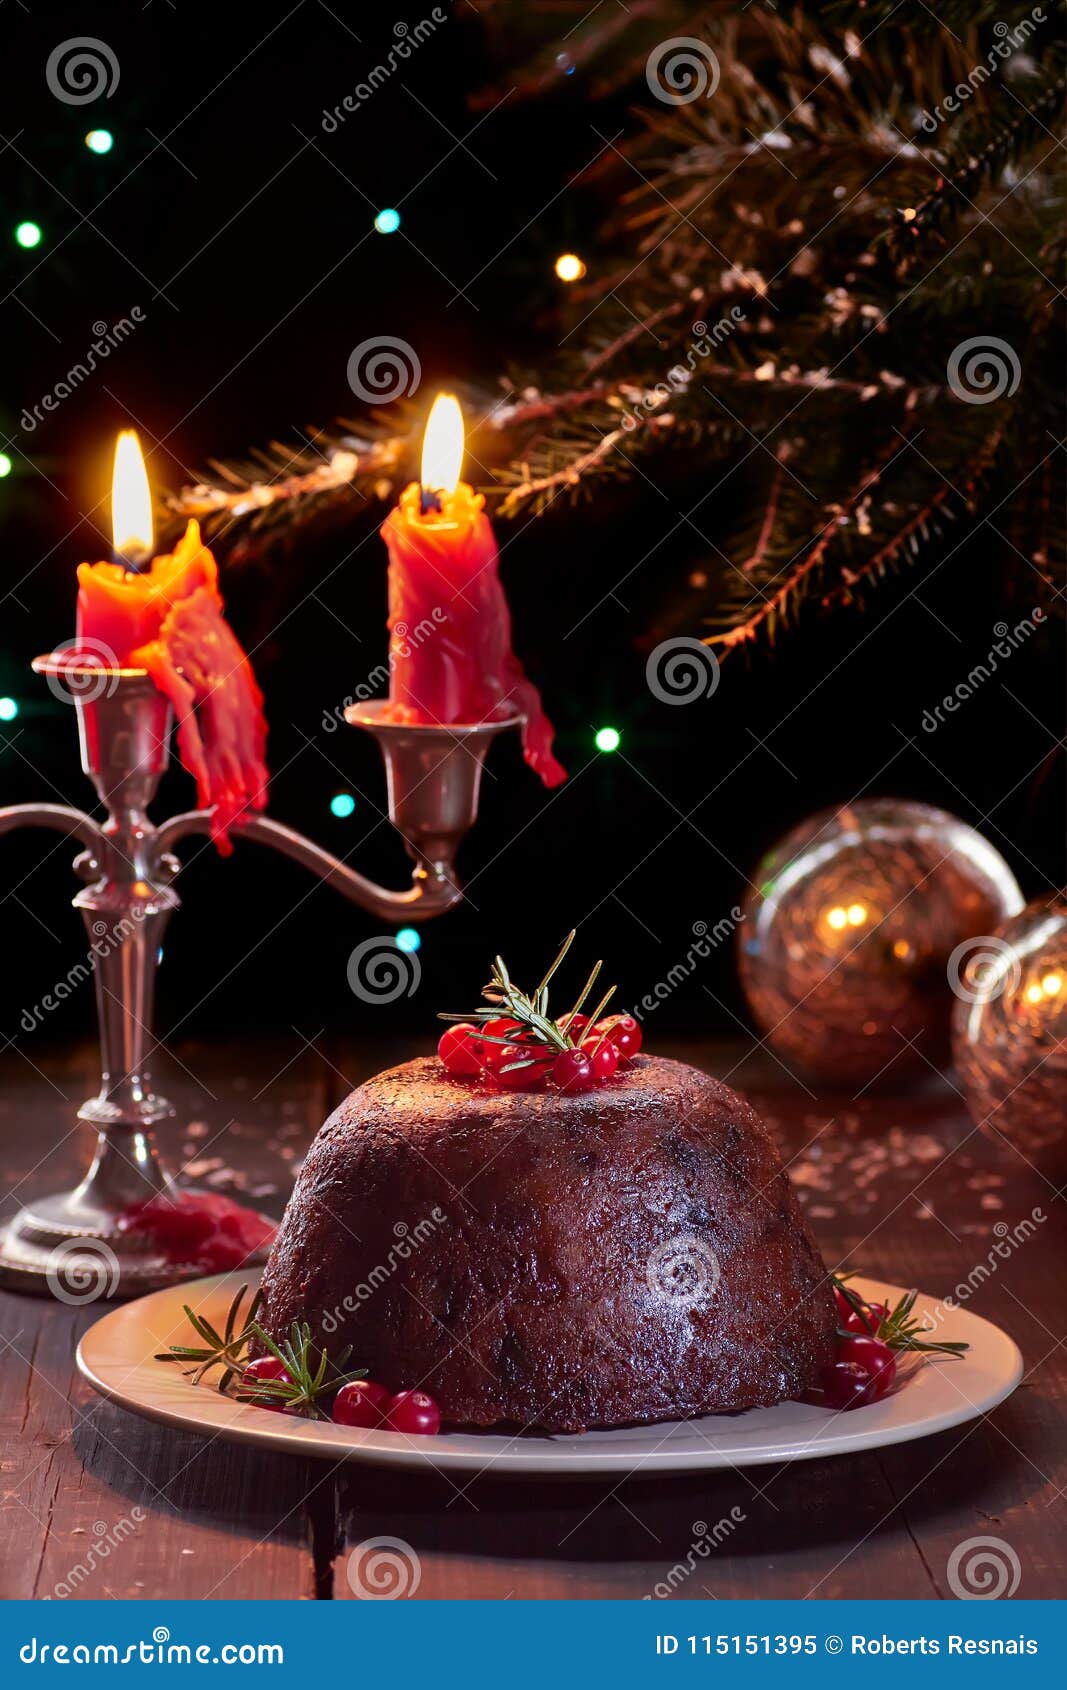 Traditional British Christmas Pudding Stock Image - Image of classic ...